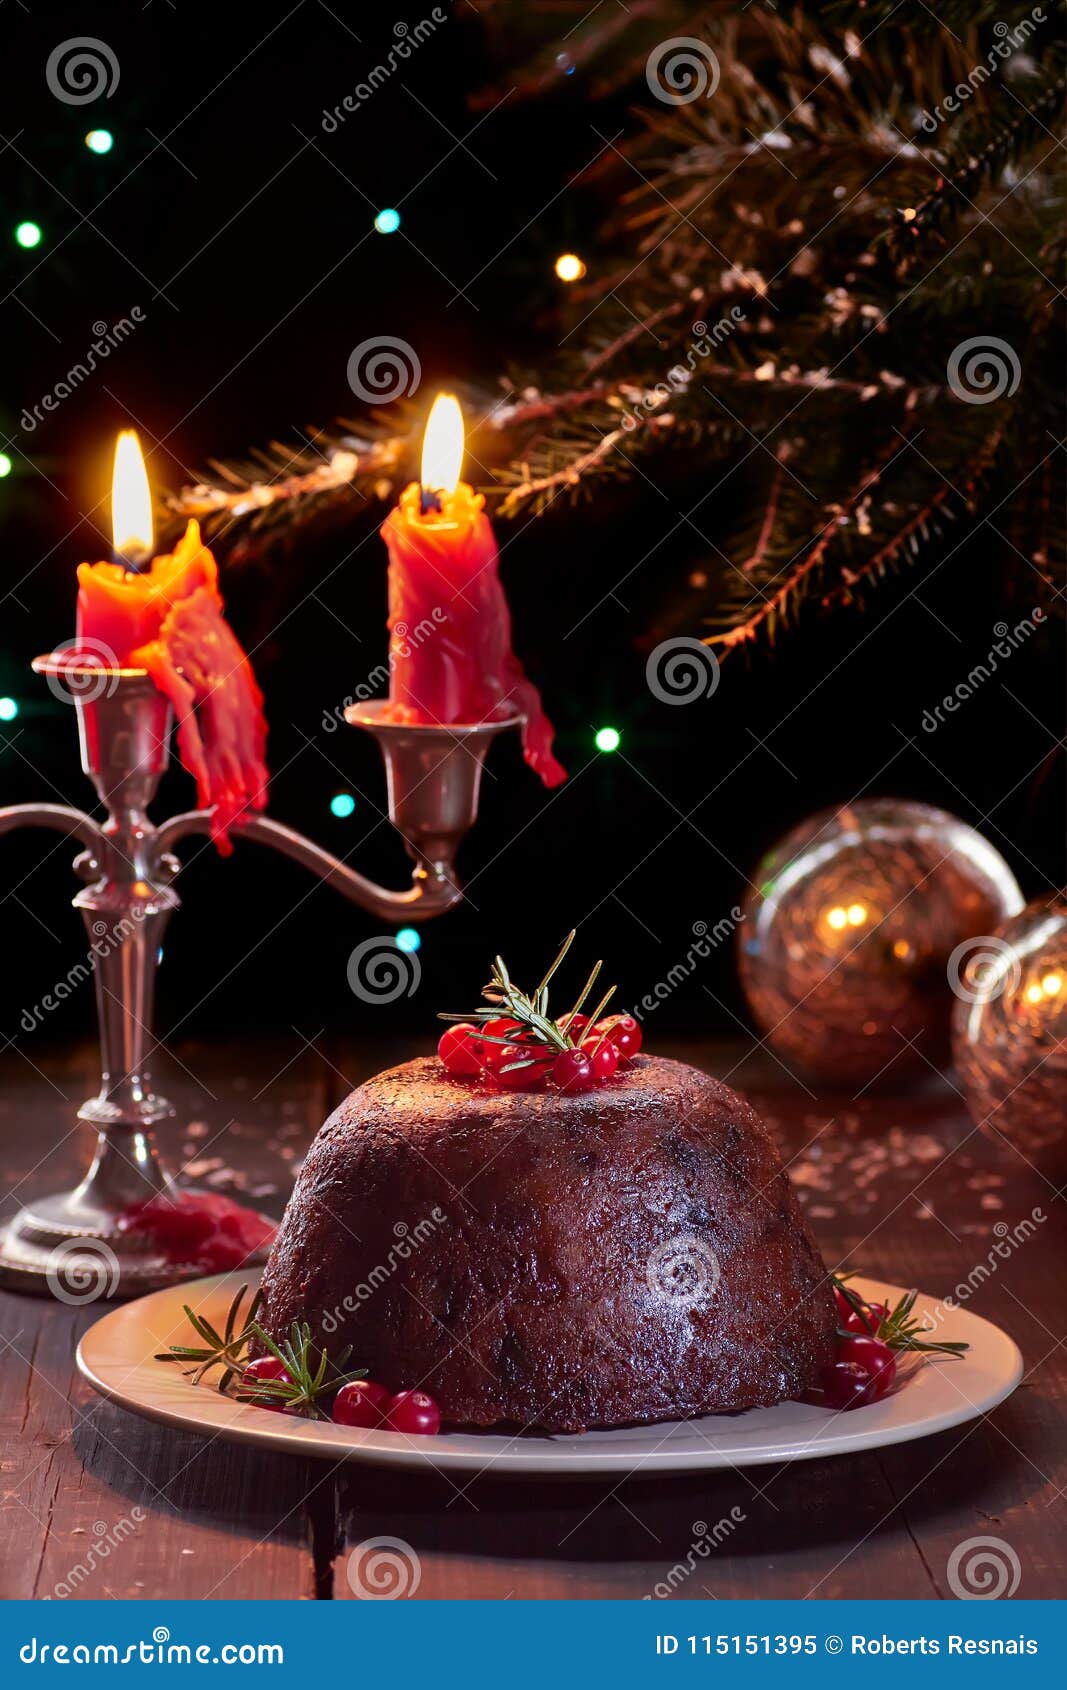 Traditional British Christmas Pudding Stock Image - Image of classic ...